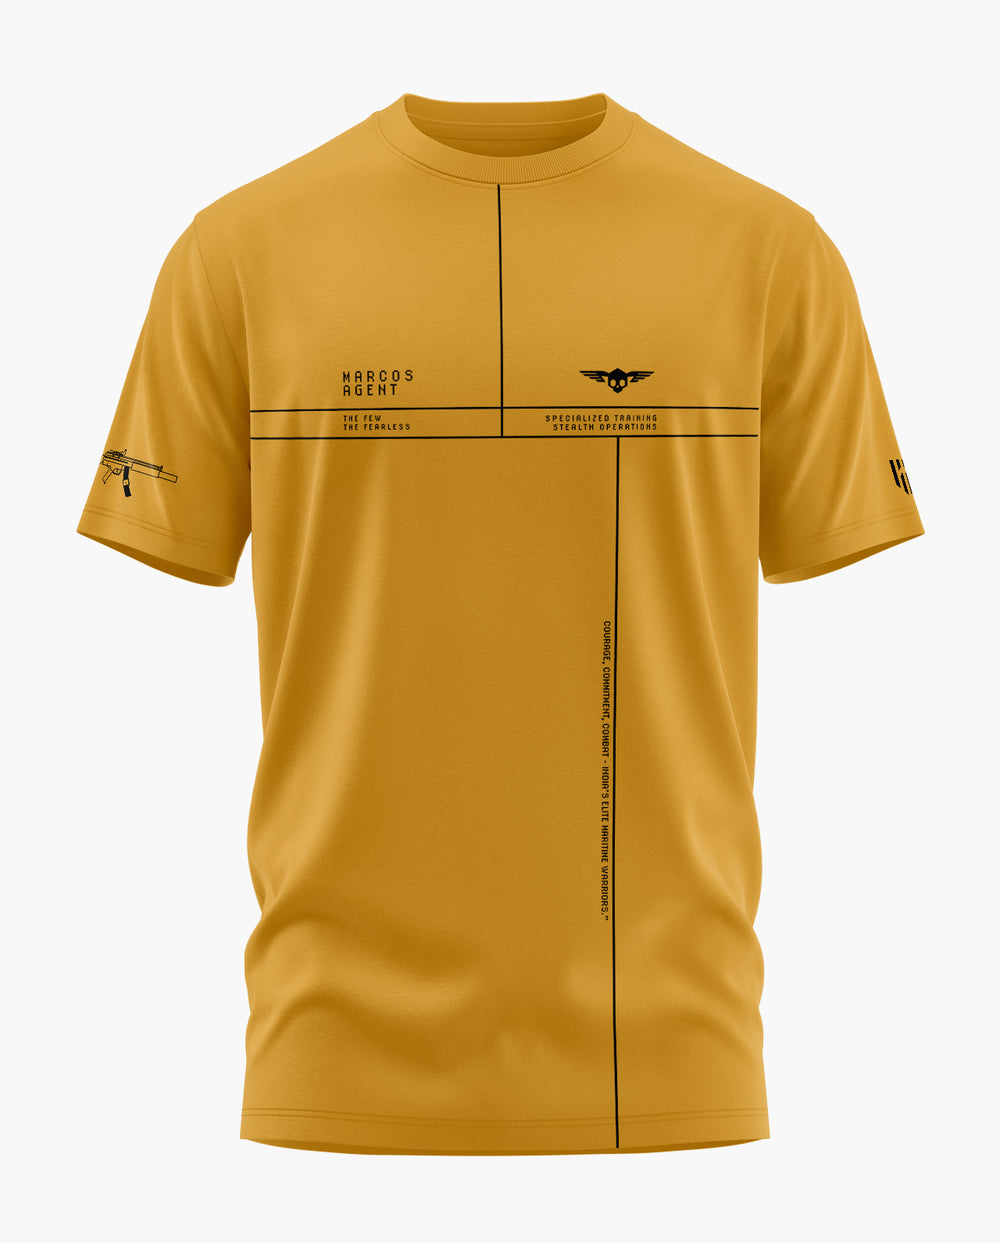 MARCOS TACTICAL AGENT T-Shirt - Aero Armour